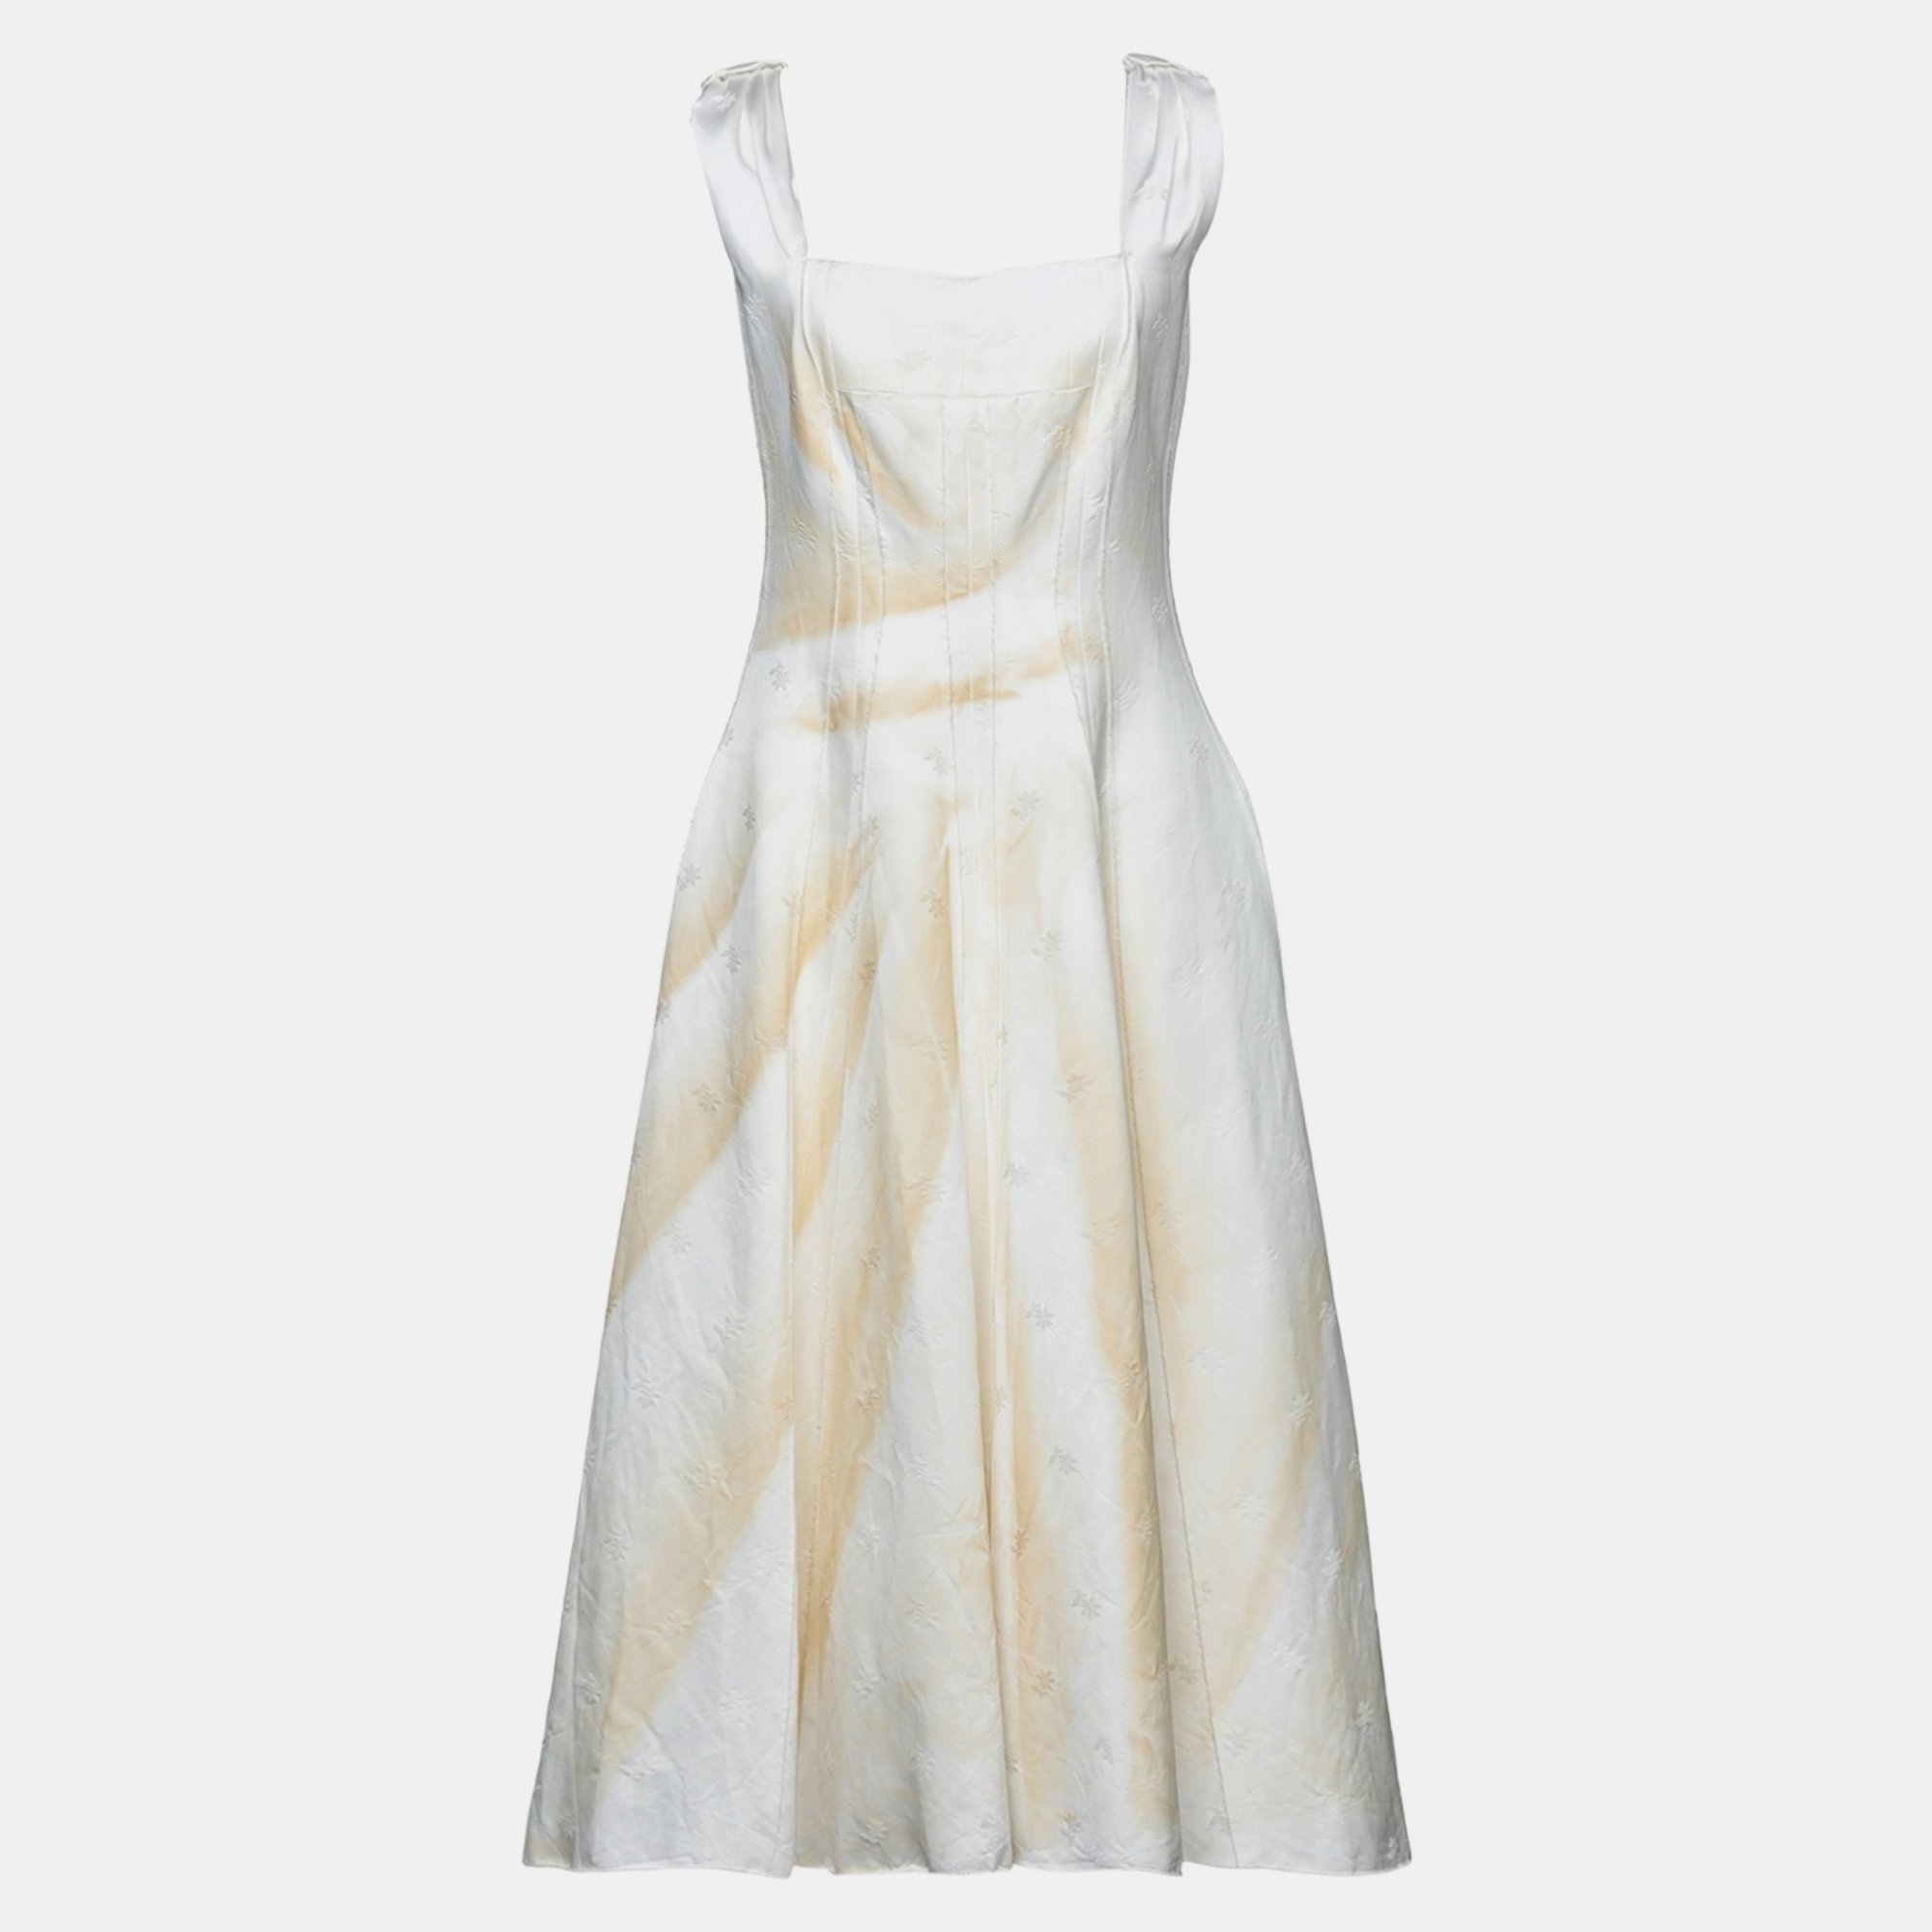 Marni cream cotton long dress s (it 40)